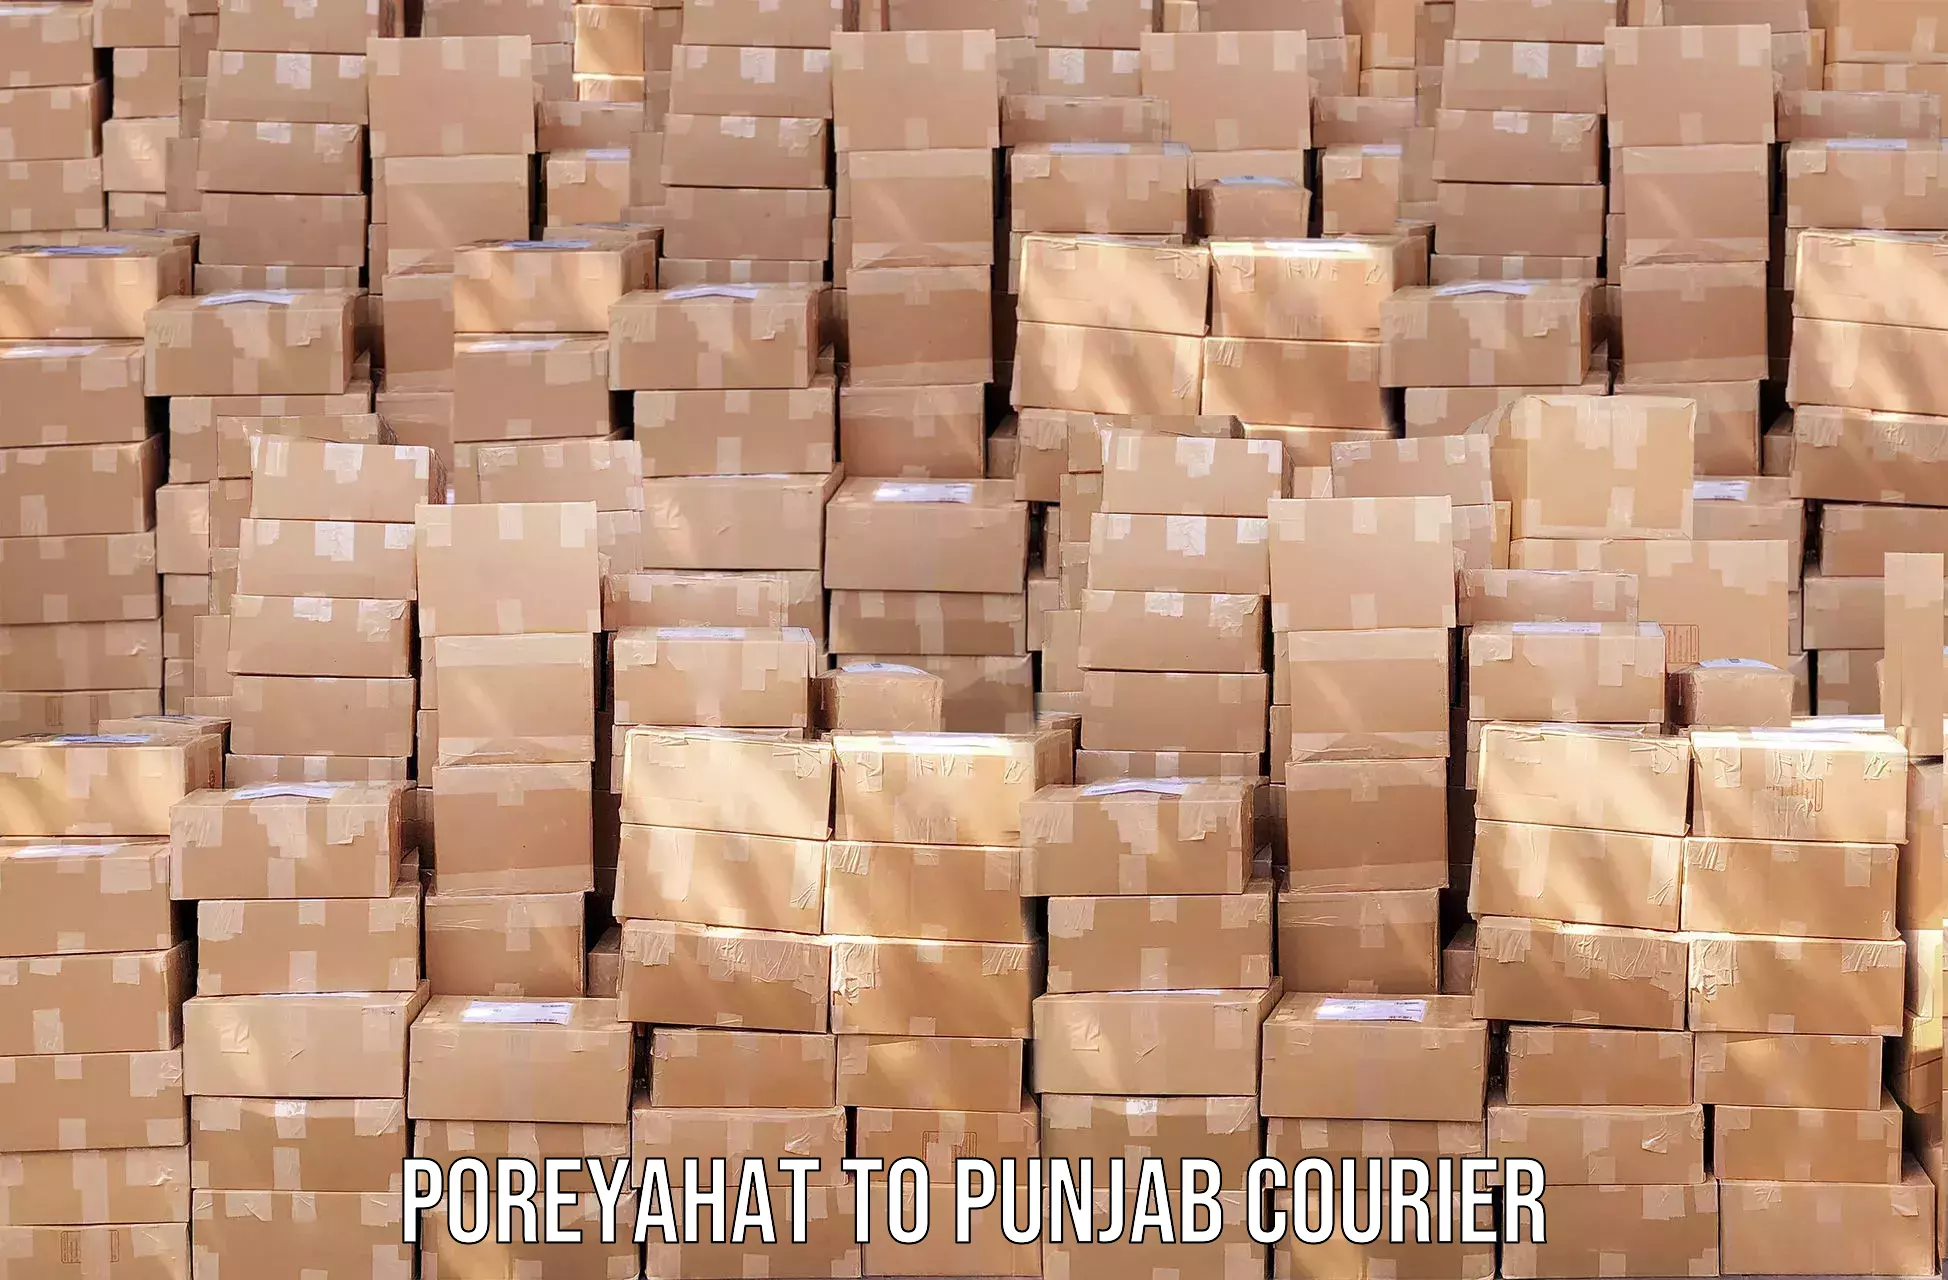 Global logistics network Poreyahat to Punjab